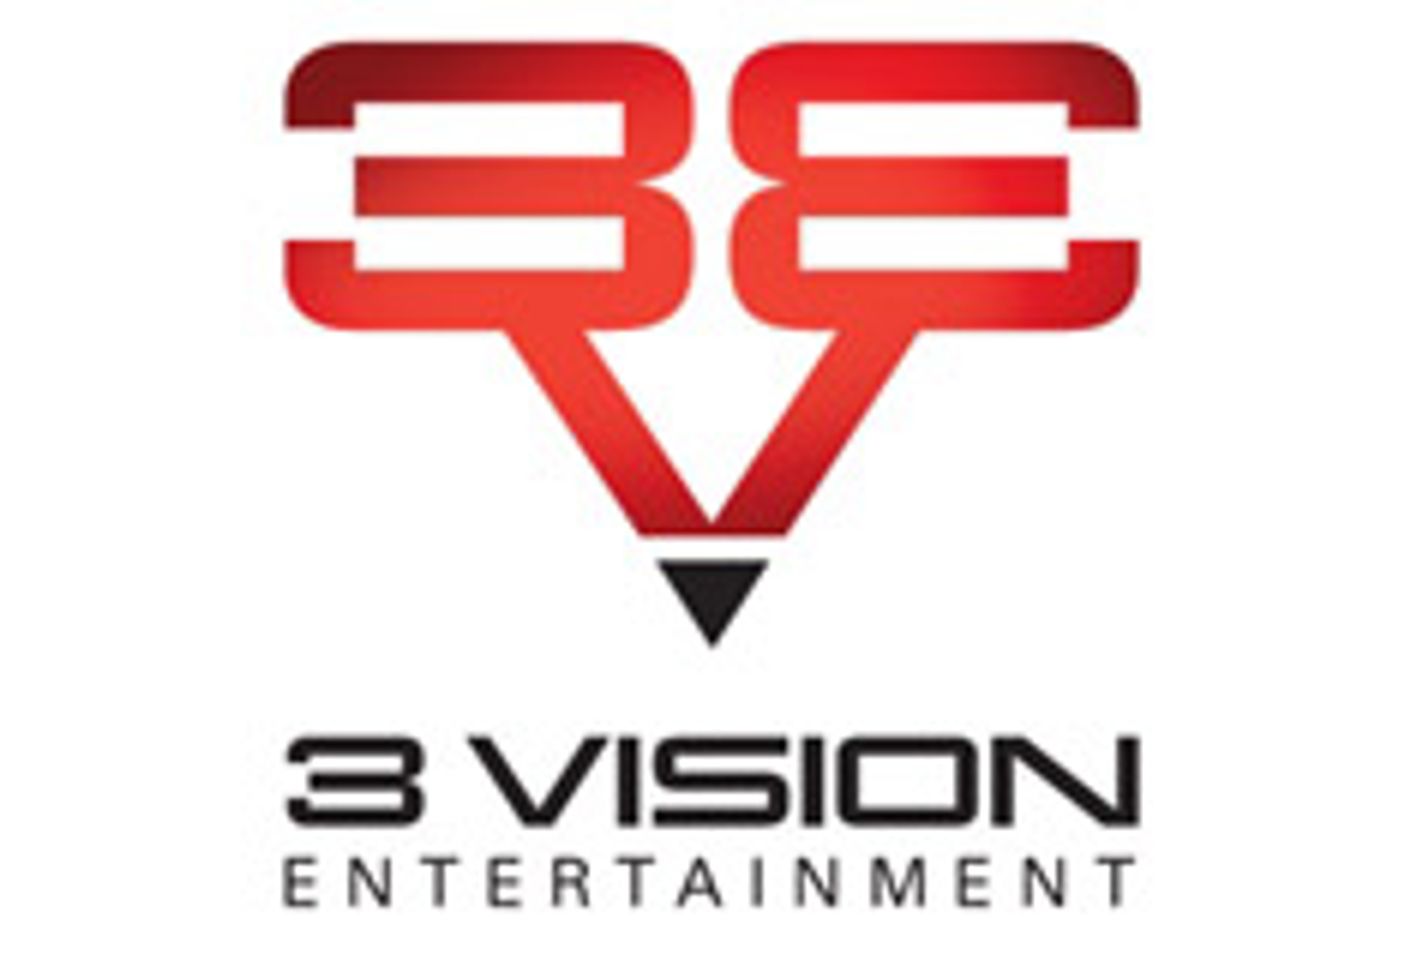 3 Vision Entertainment Promotes Harris